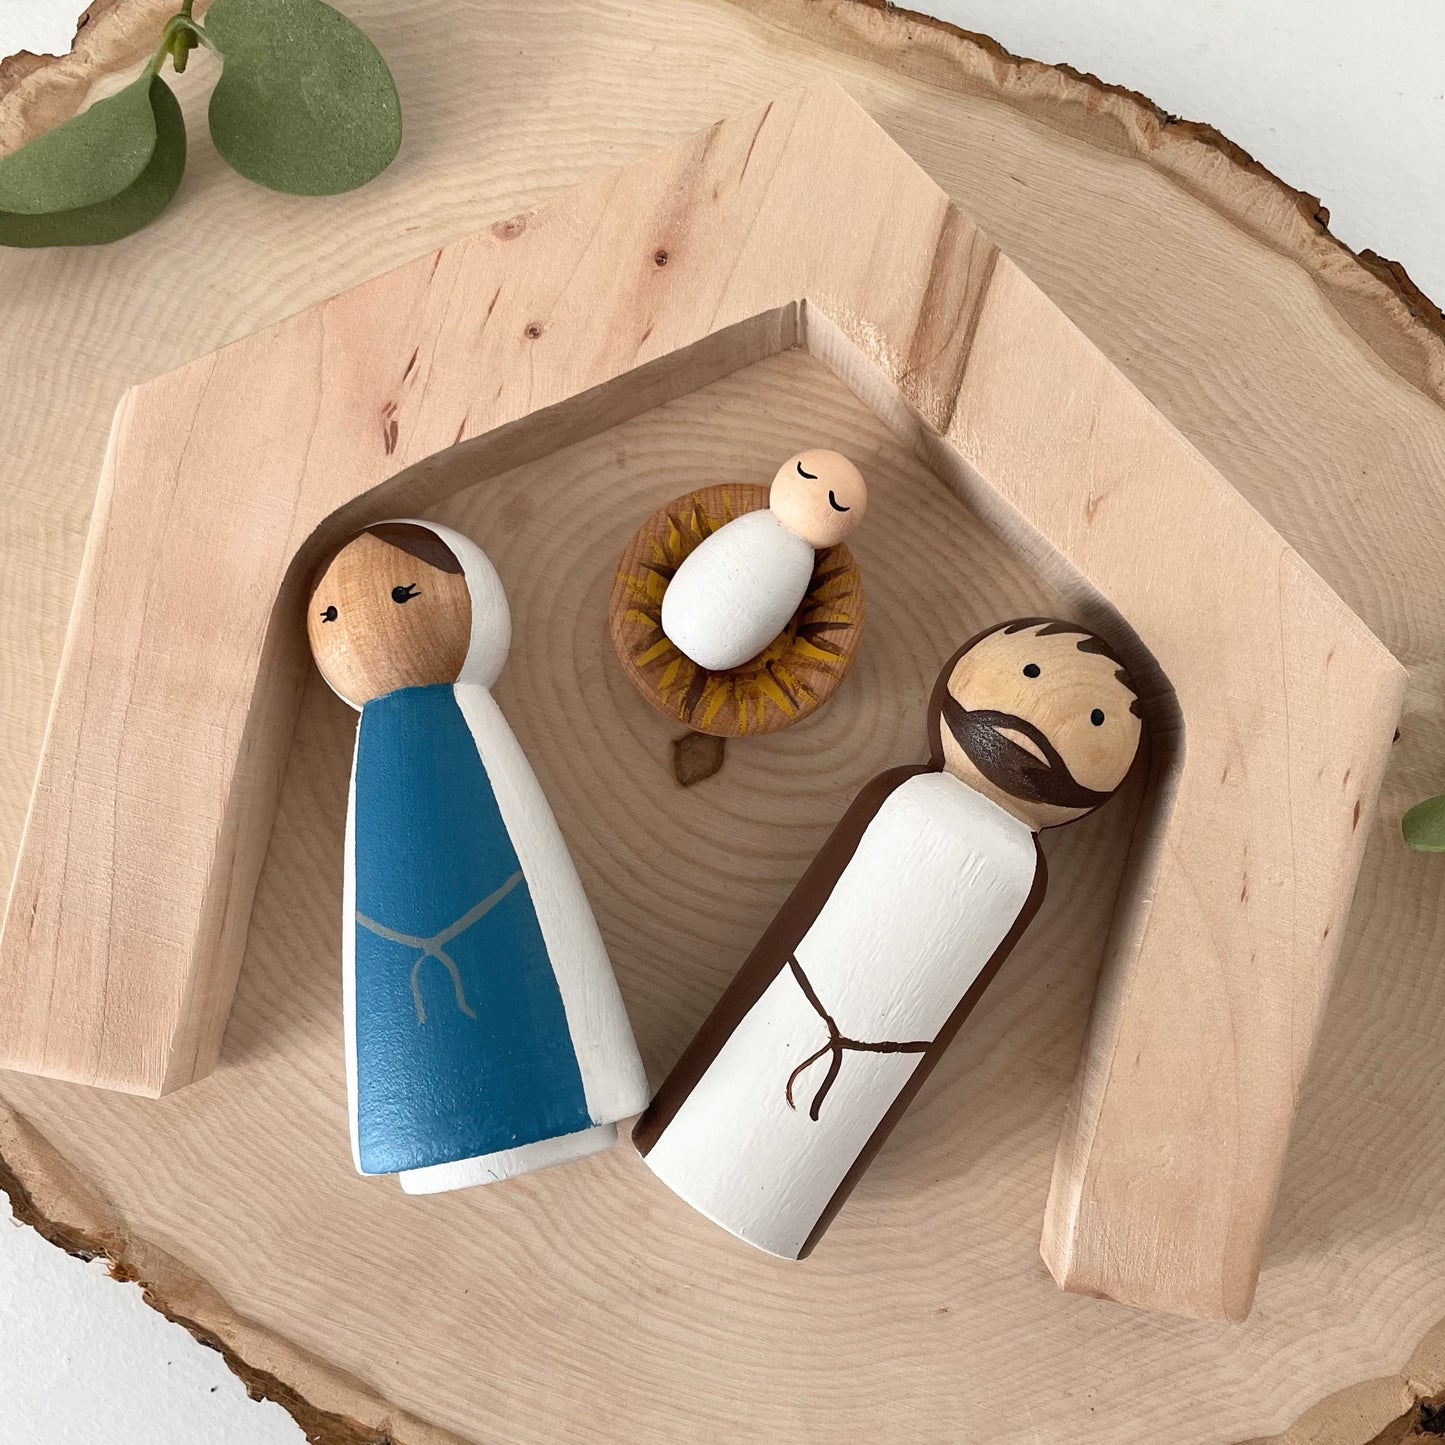 Wooden peg doll Nativity Scene